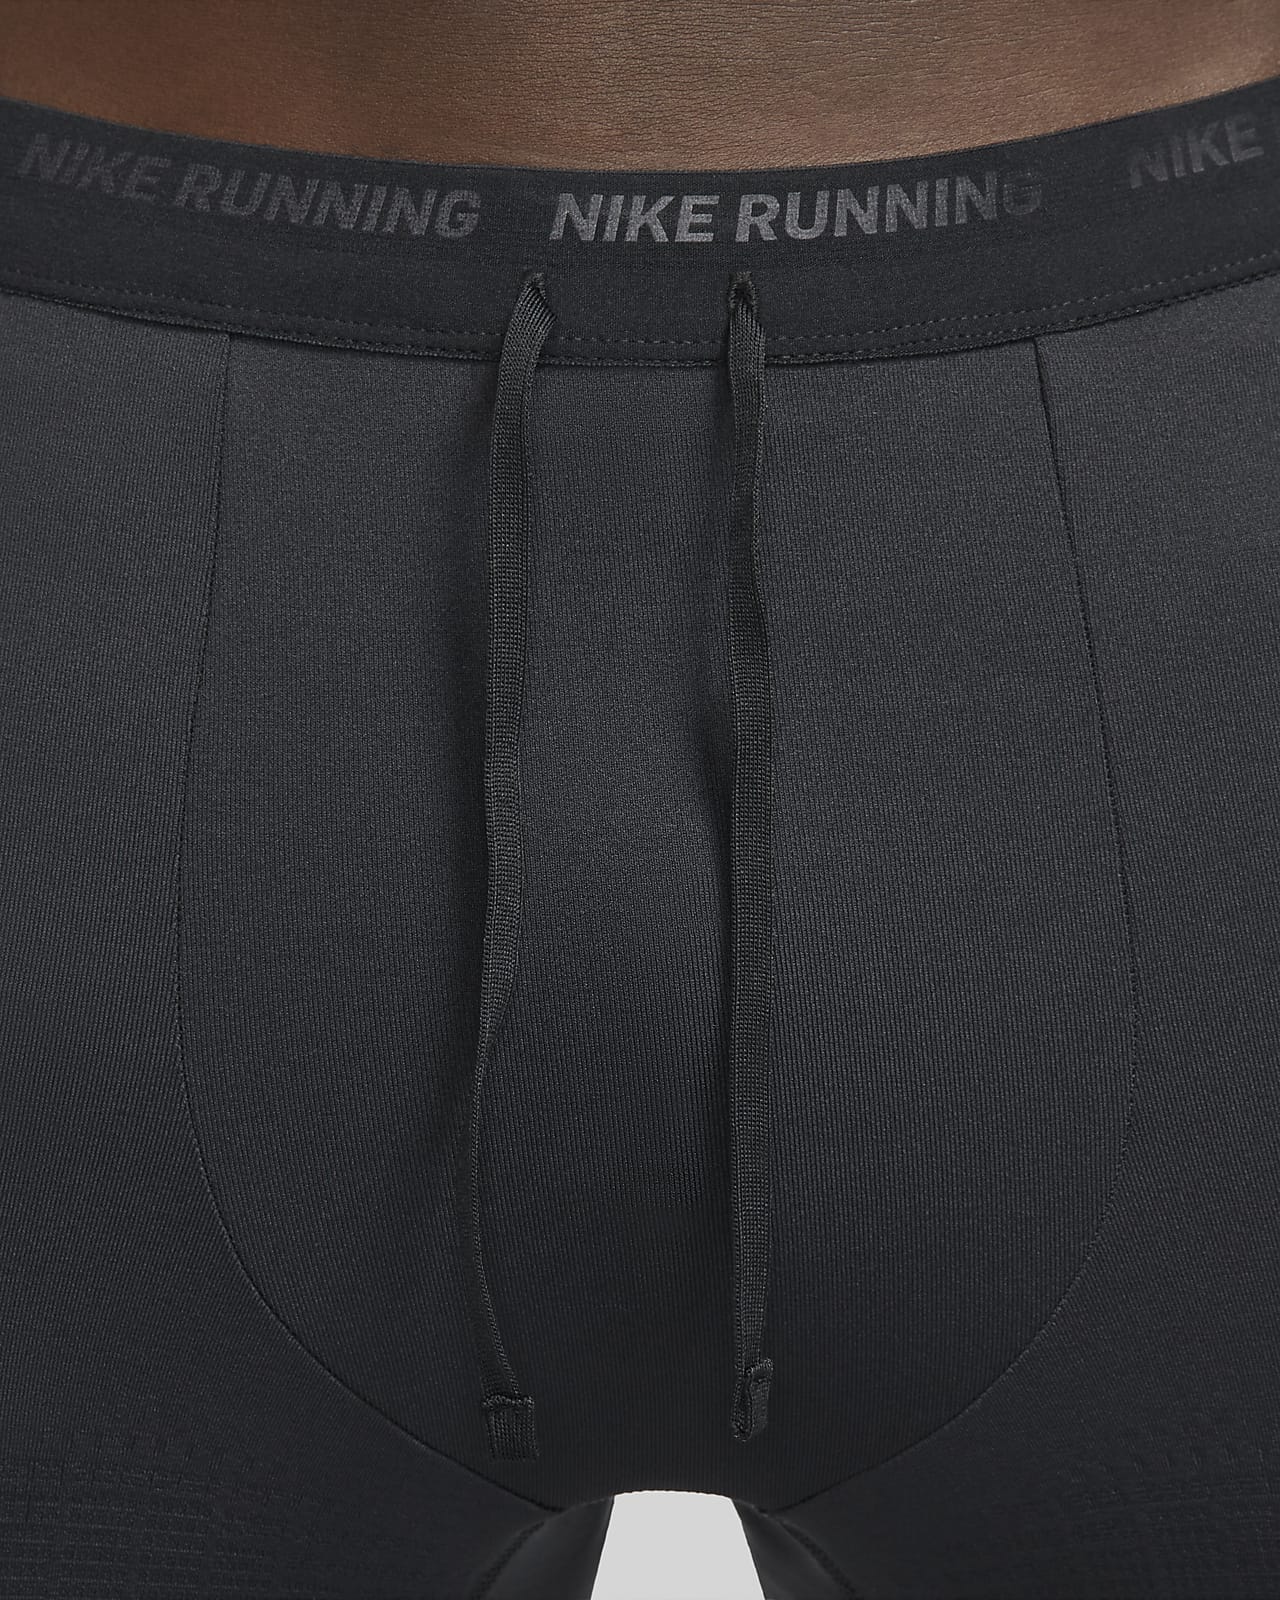 Nike Phenom Men's Dri-FIT Running Tights.